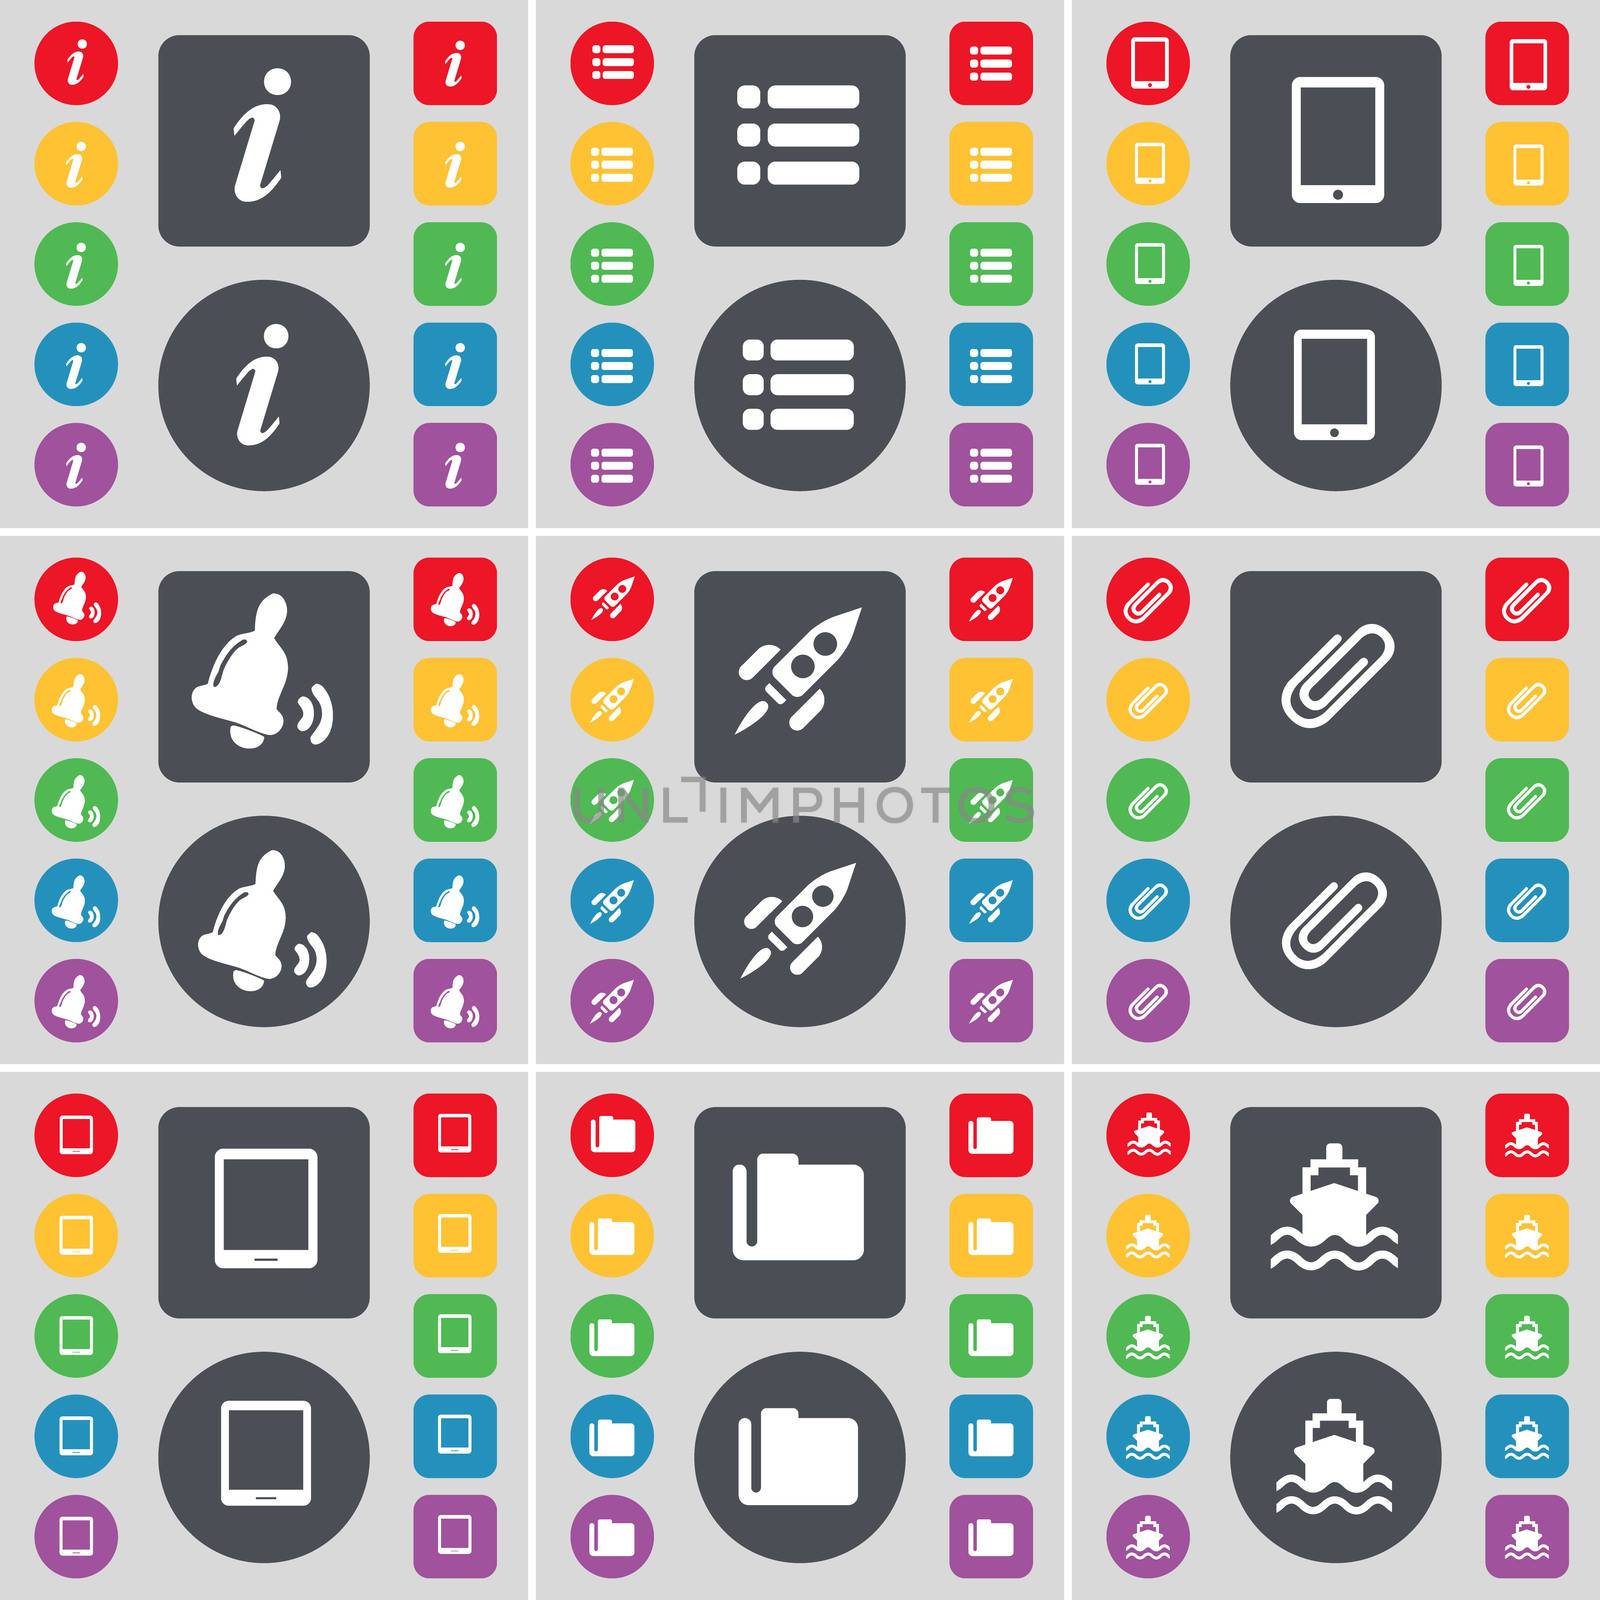 Information, List, Tablet PC, Bell, Rocket, Clip, Tablet PC, Folder, Ship icon symbol. A large set of flat, colored buttons for your design. illustration